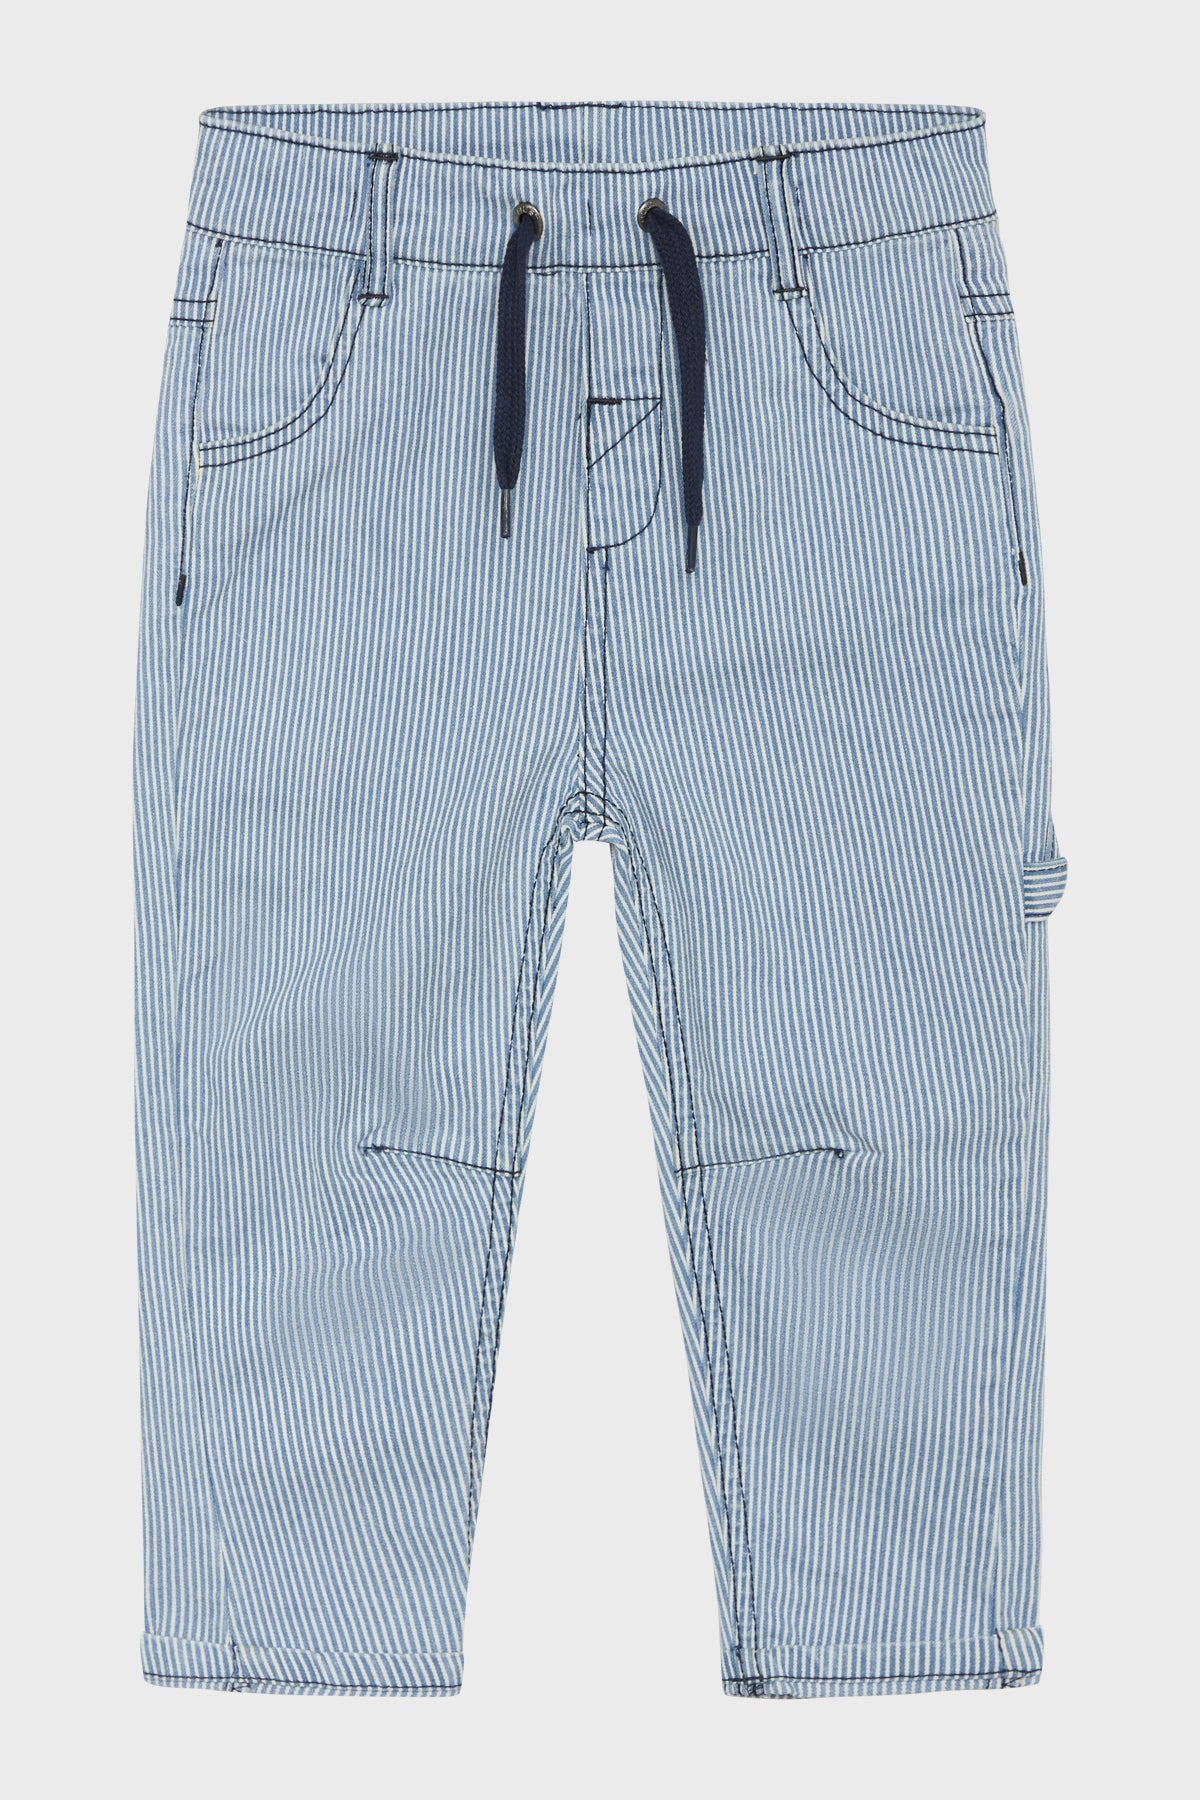 HCJunior - Jeans